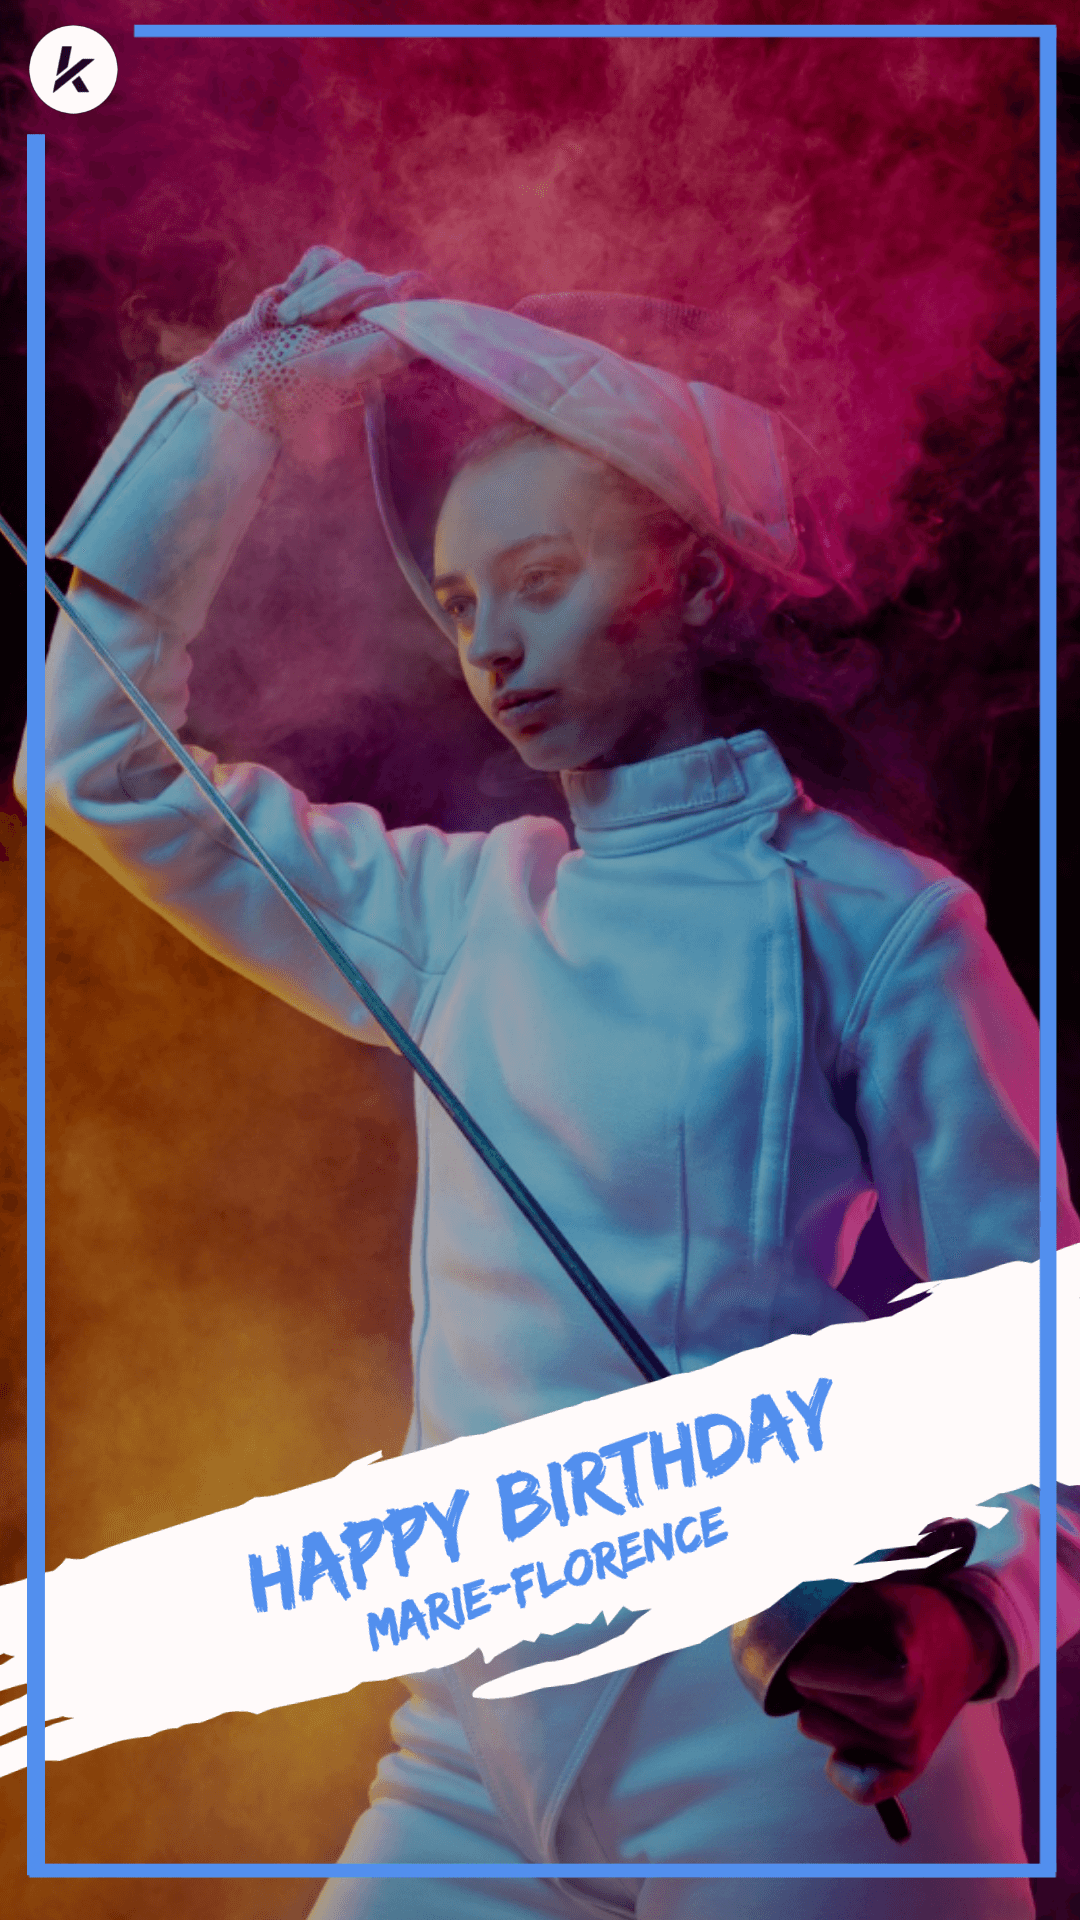 Fencing Player Happy Birthday